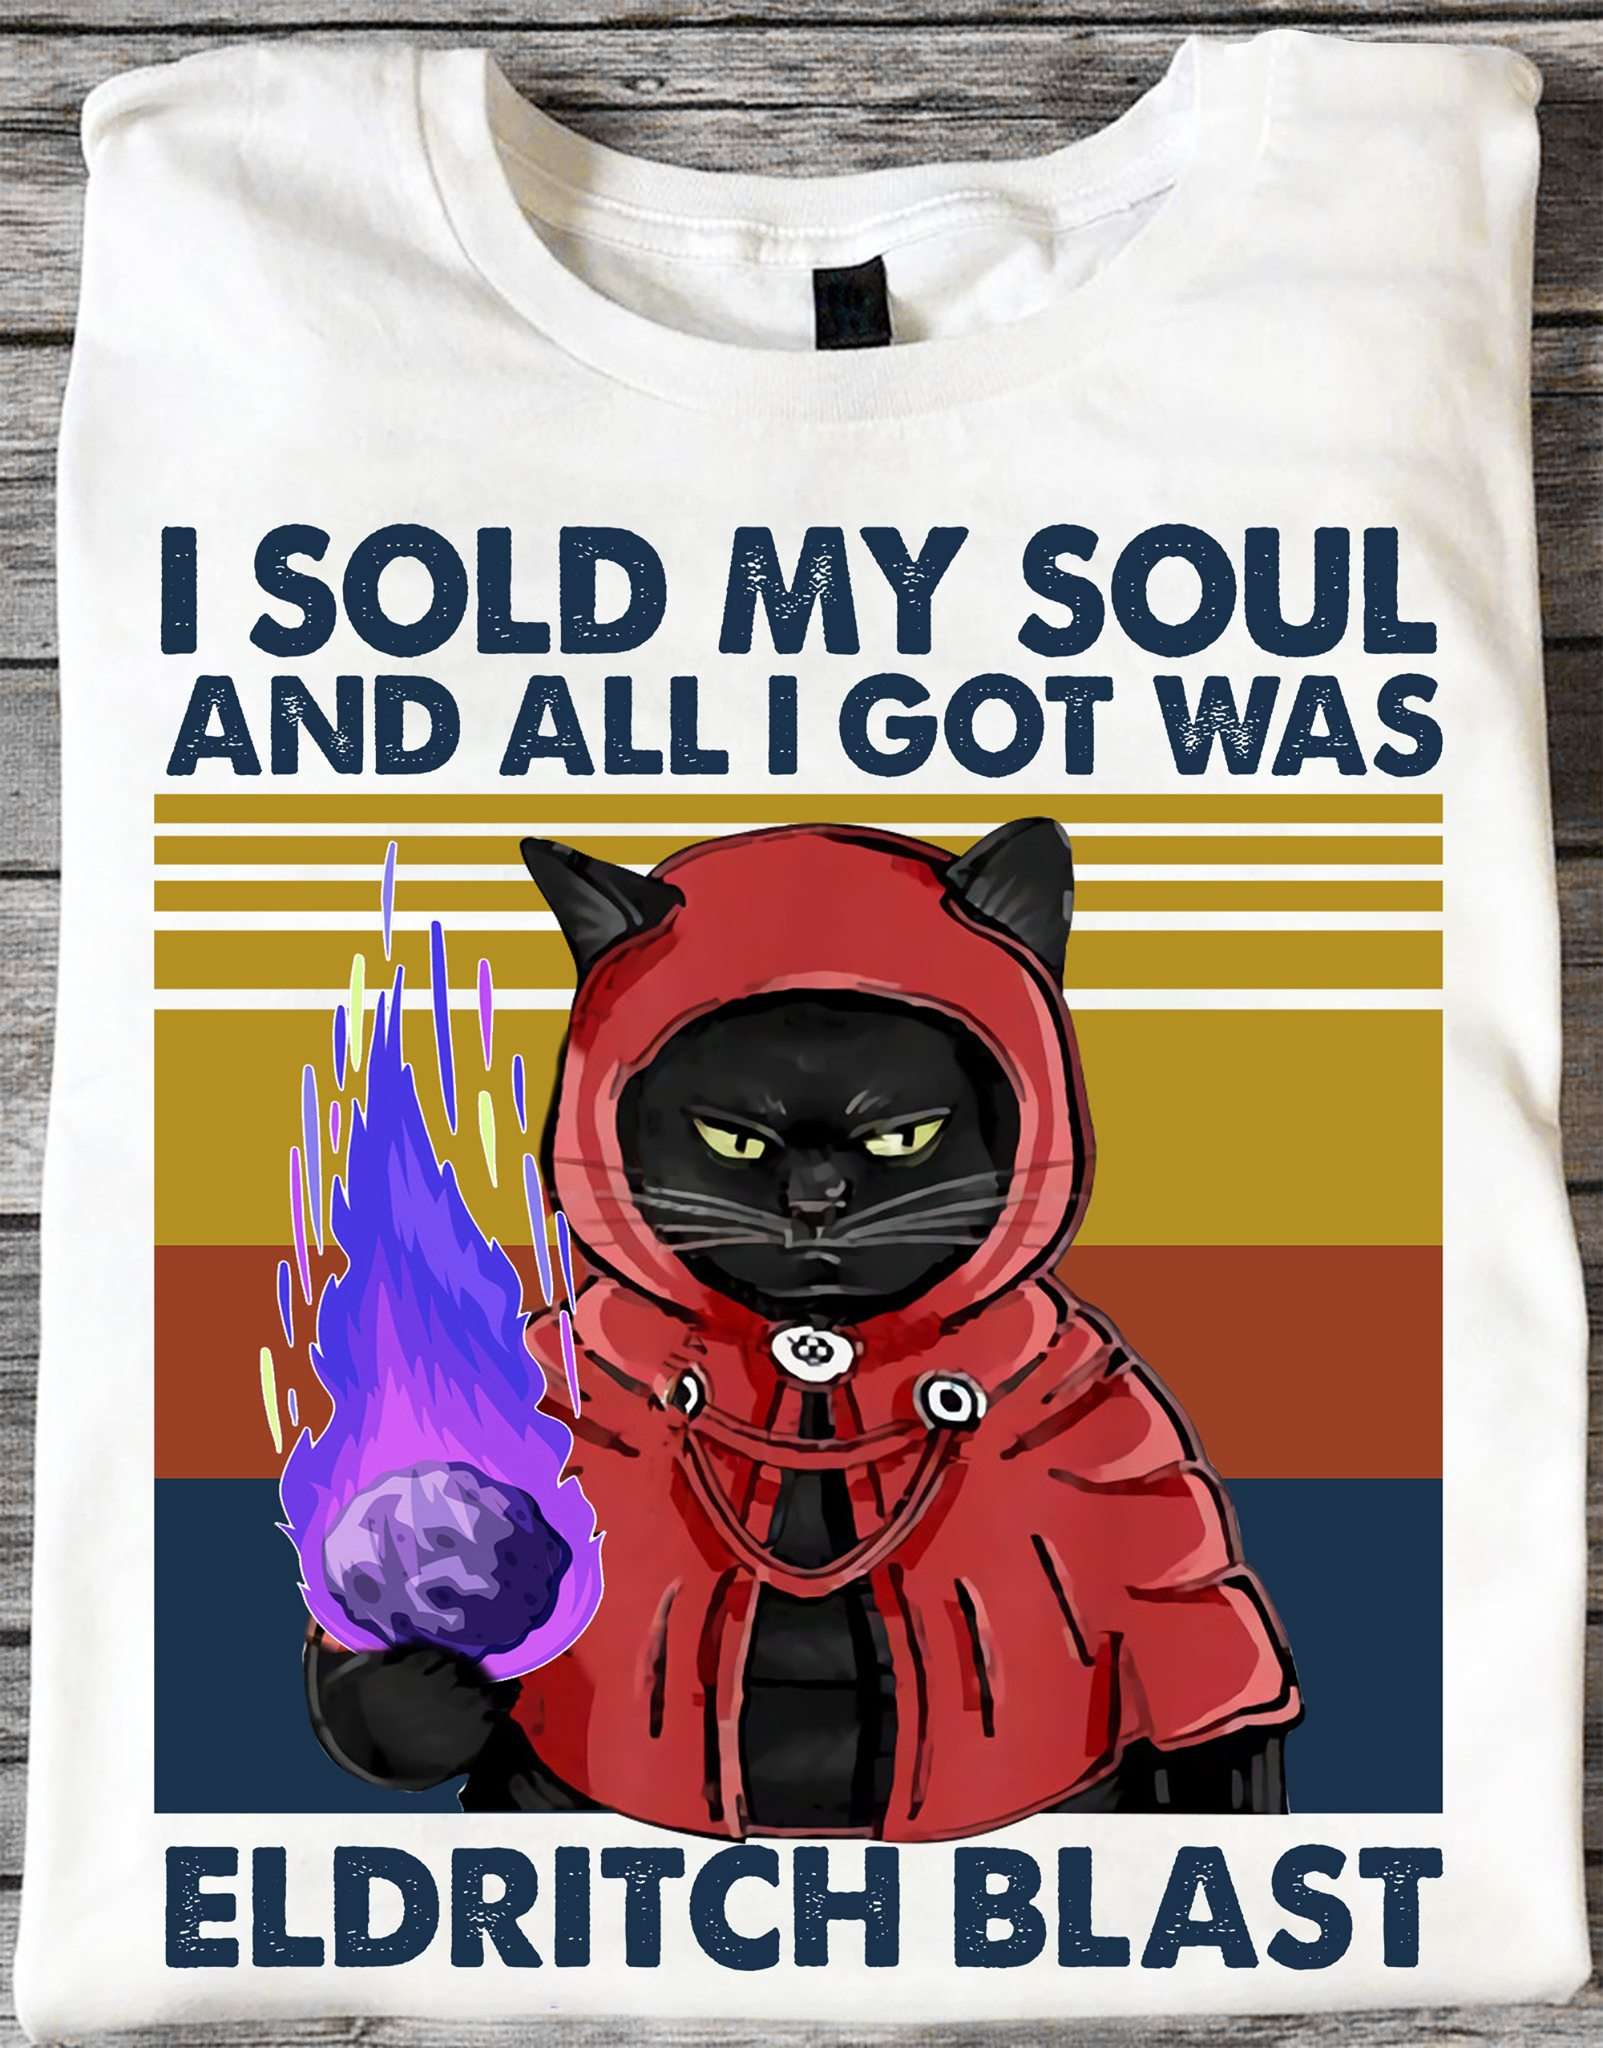 I sold my soul and all I got was Eldritch Blast - Shadow blast, black cat and blast